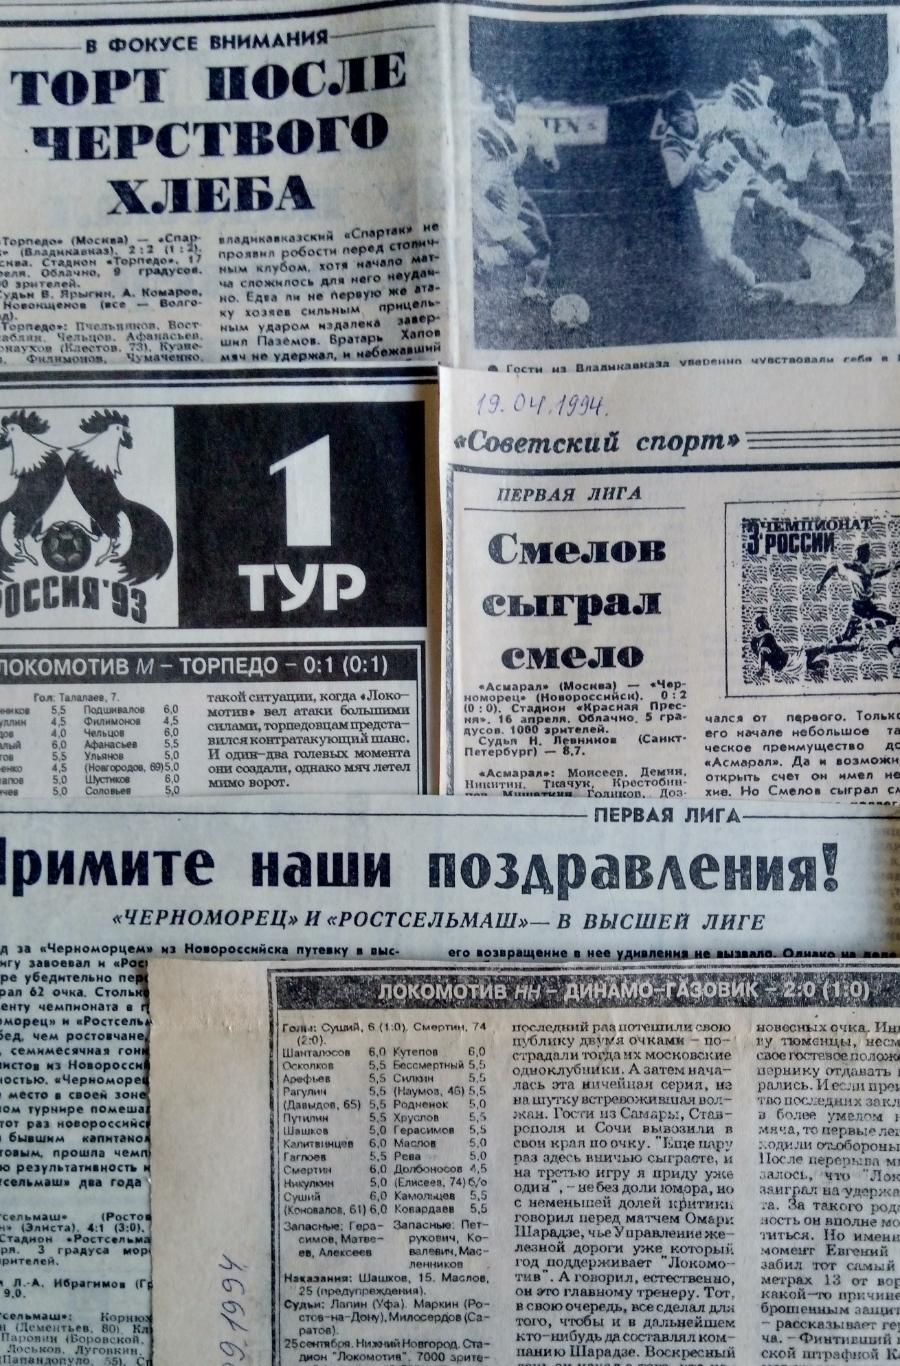 КамАЗ Н. Челны - Уралмаш Екатеринбург (газета Спорт-Экспресс - 1994)